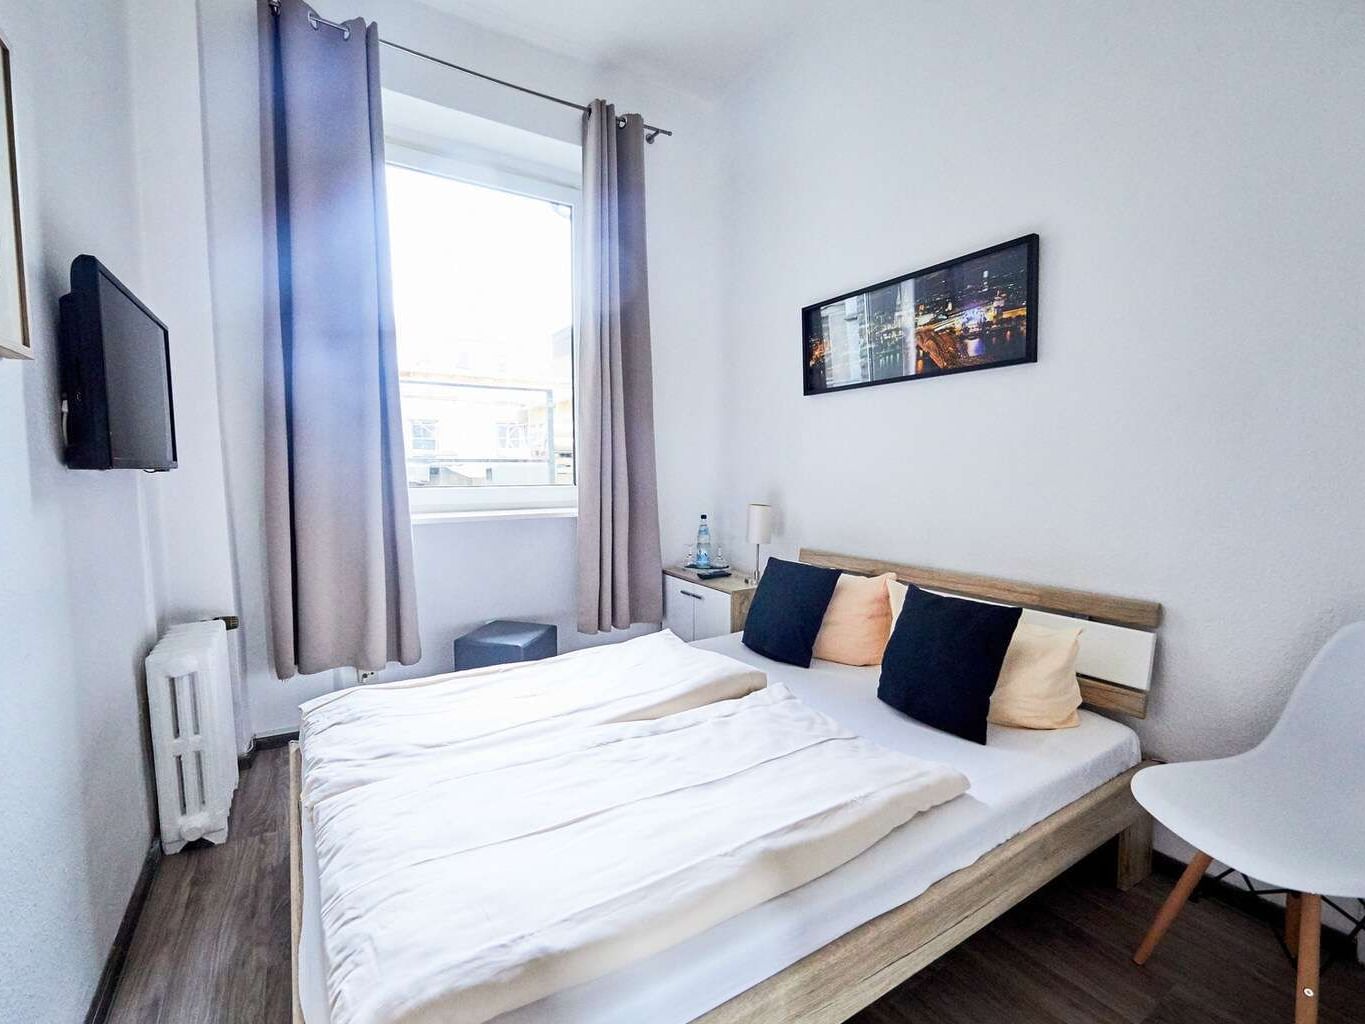 Room with one bed at Rheinland Hotel Kollektion